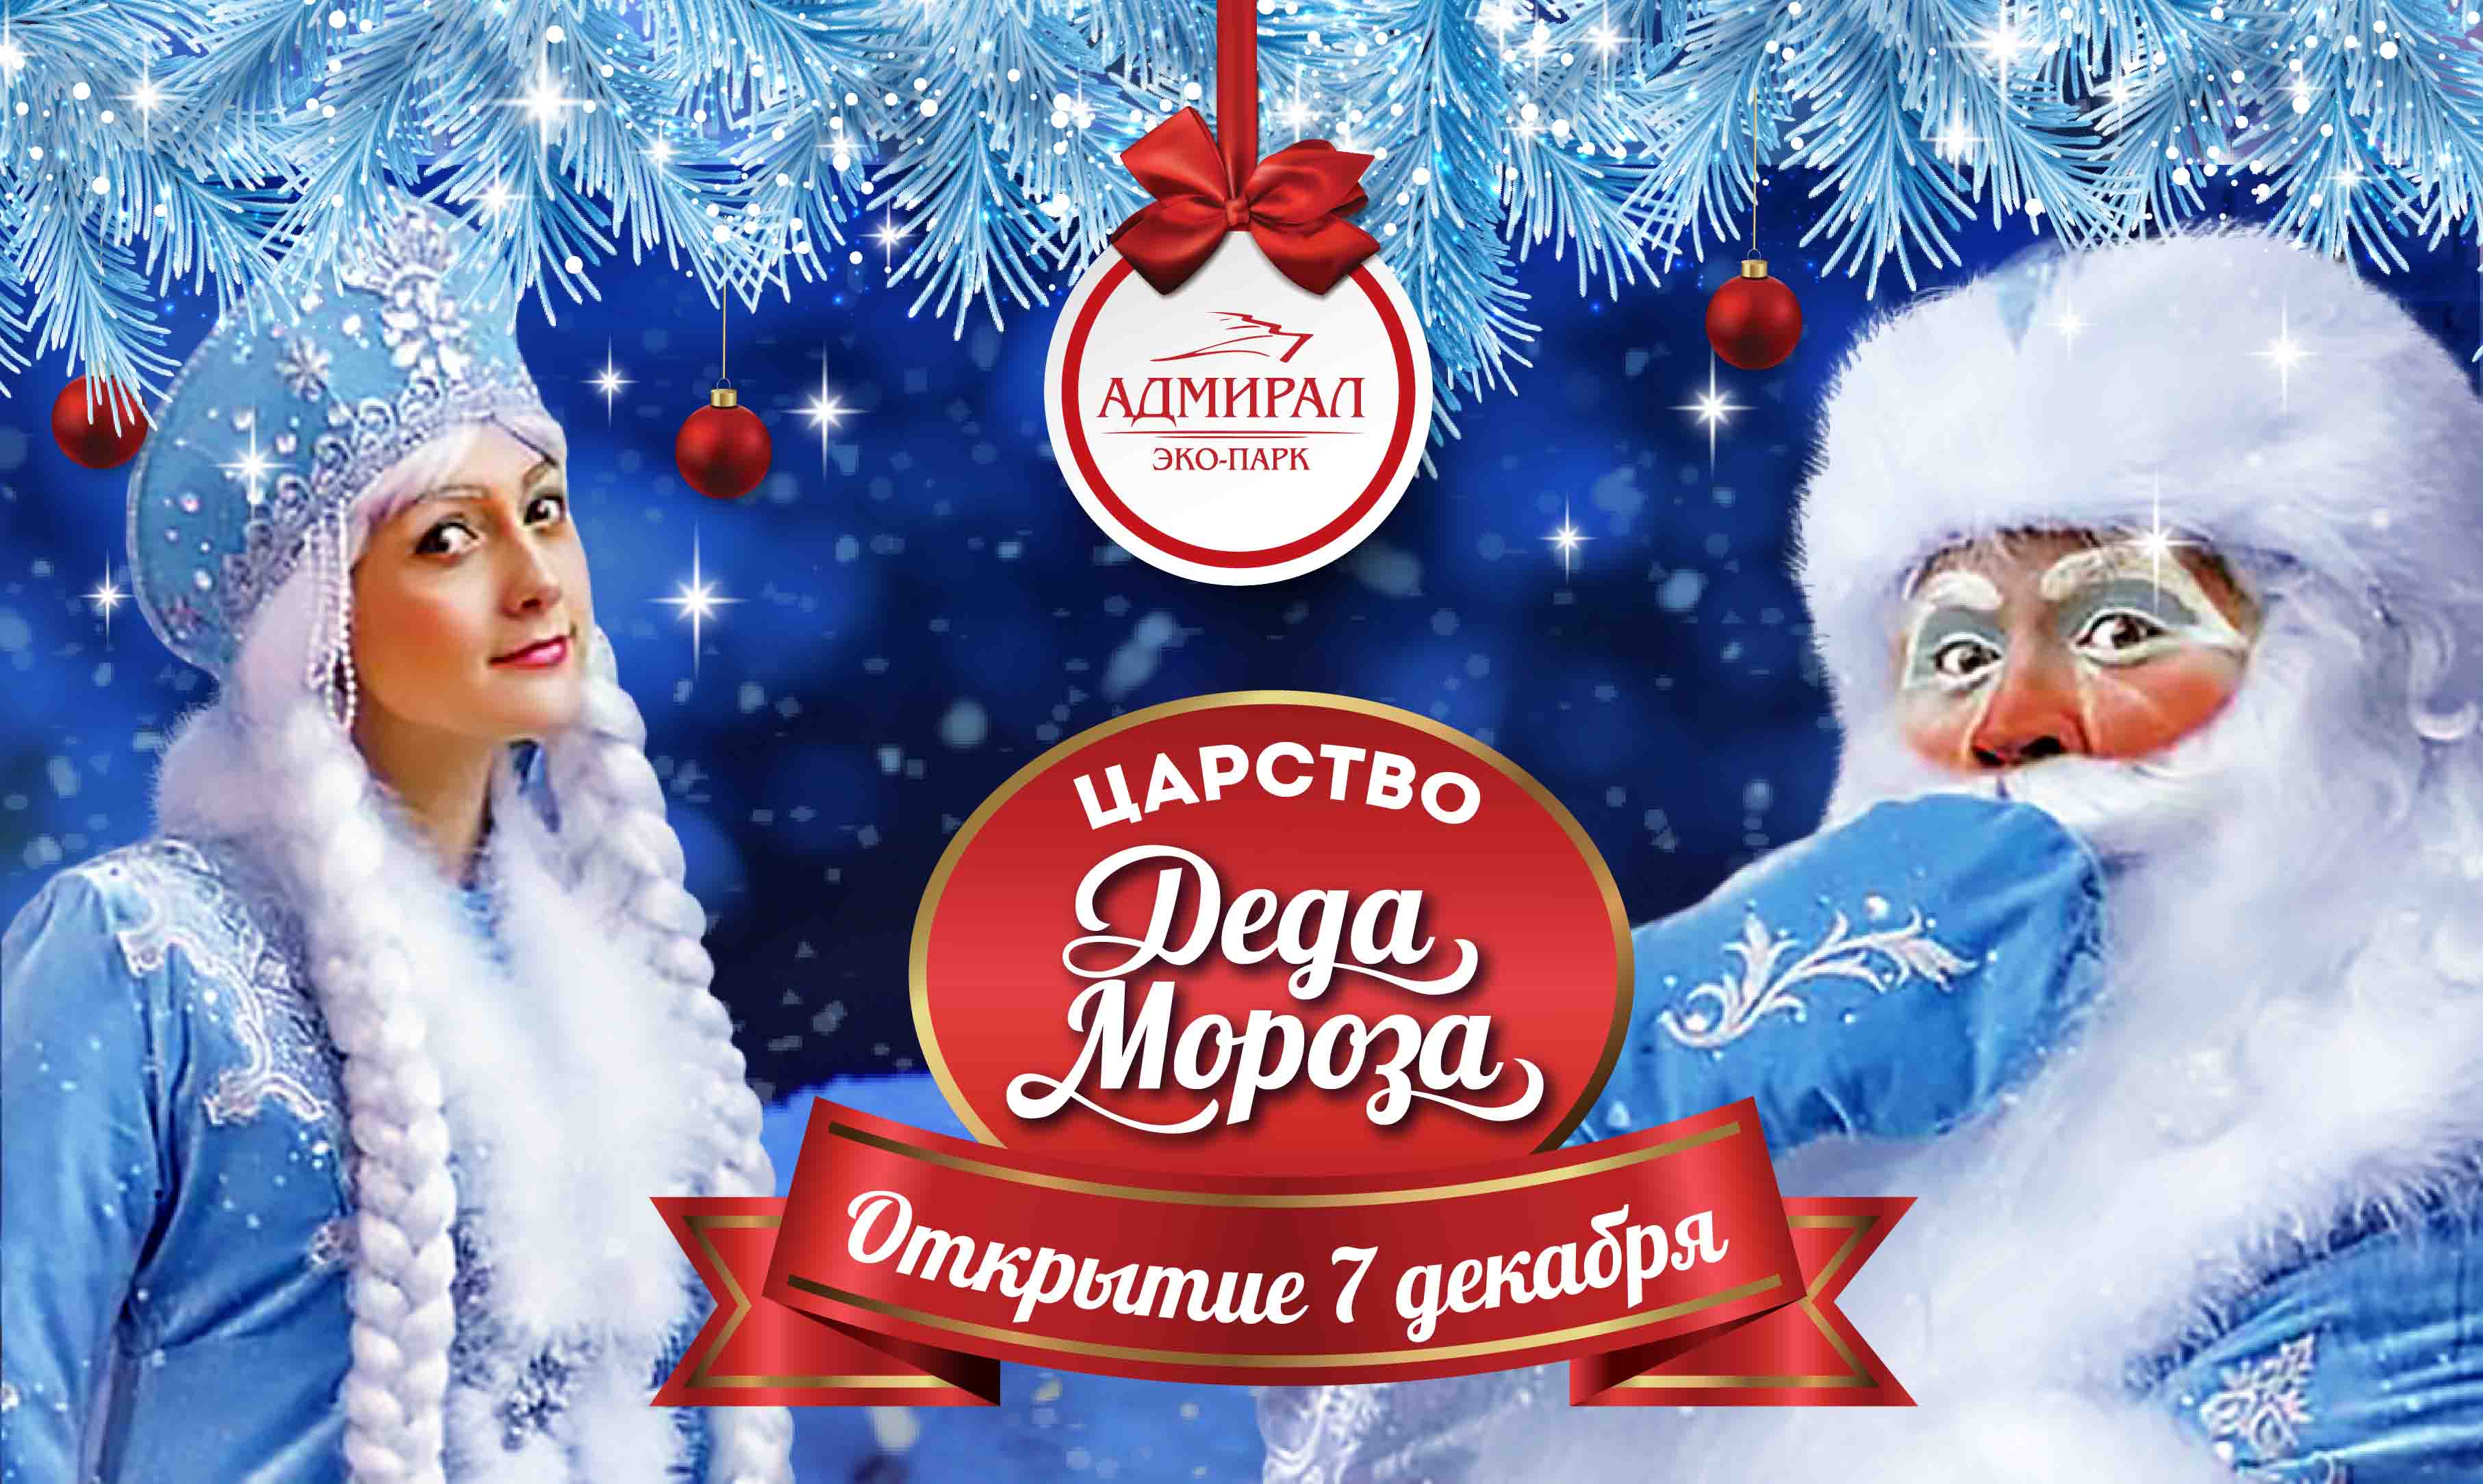 Открытие Царства Деда Мороза! в Красноярске, Эко-Парк Адмирал